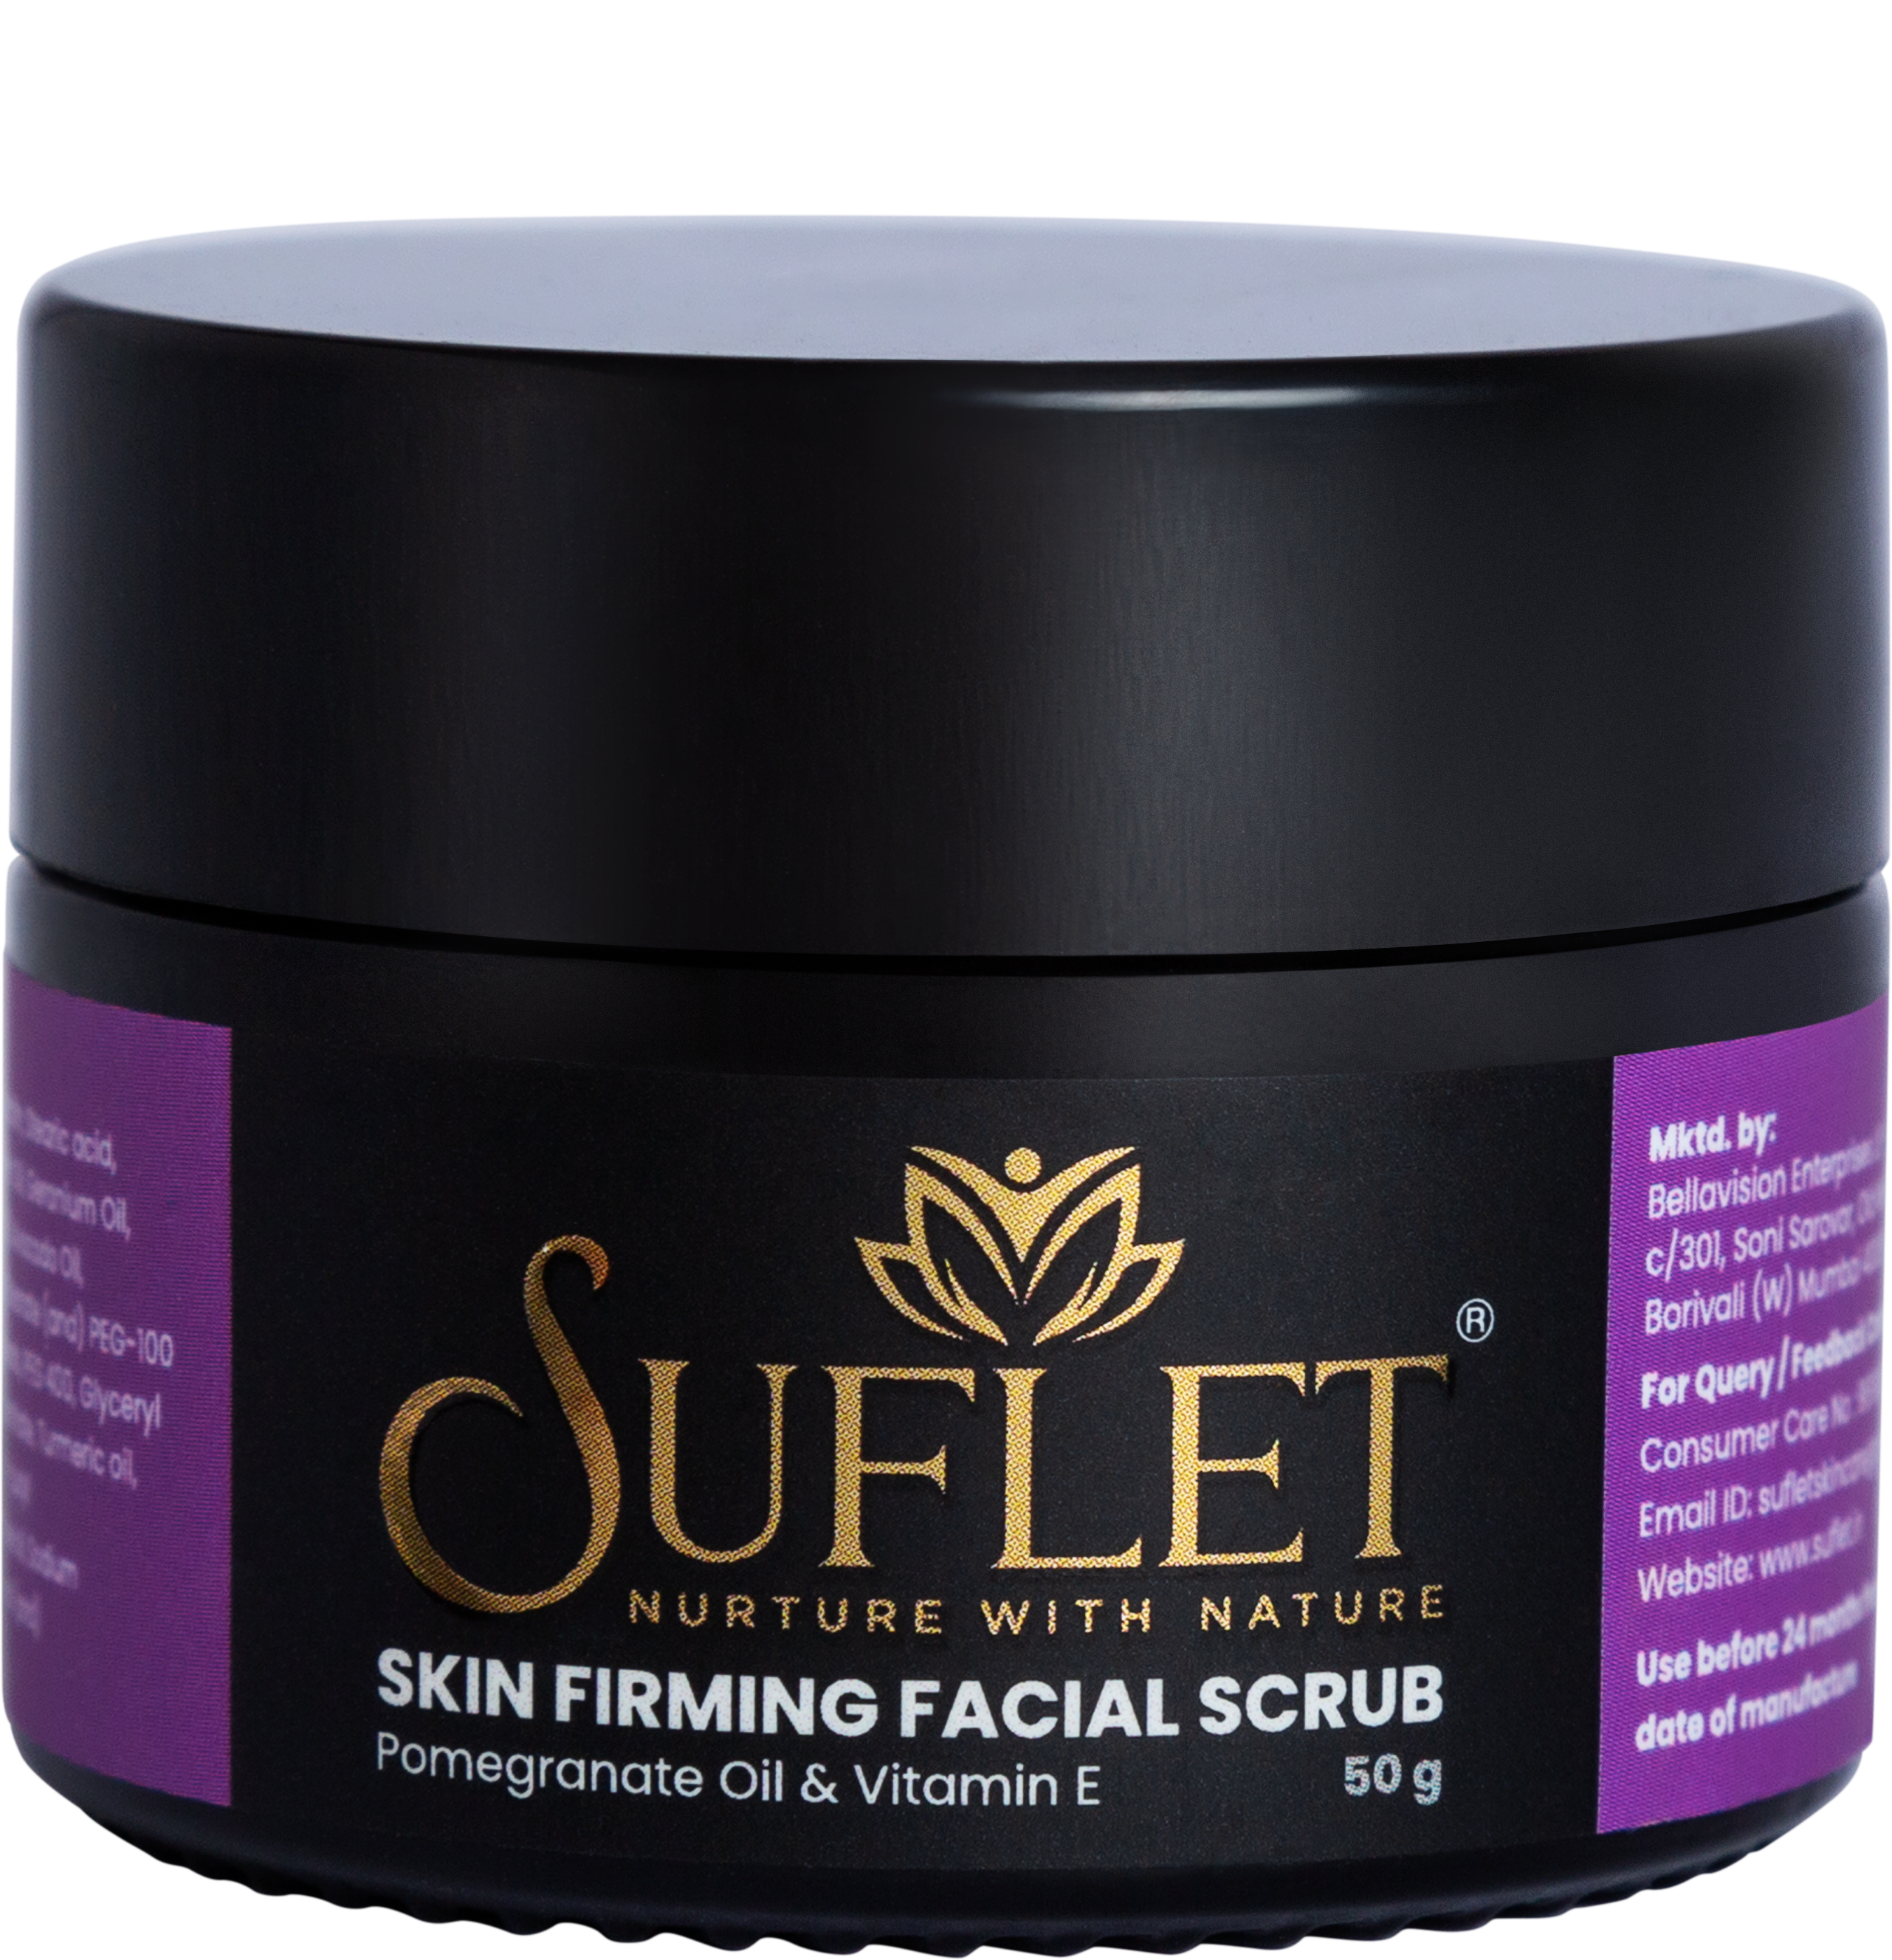 Suflet Skin Firming Facial Scrub